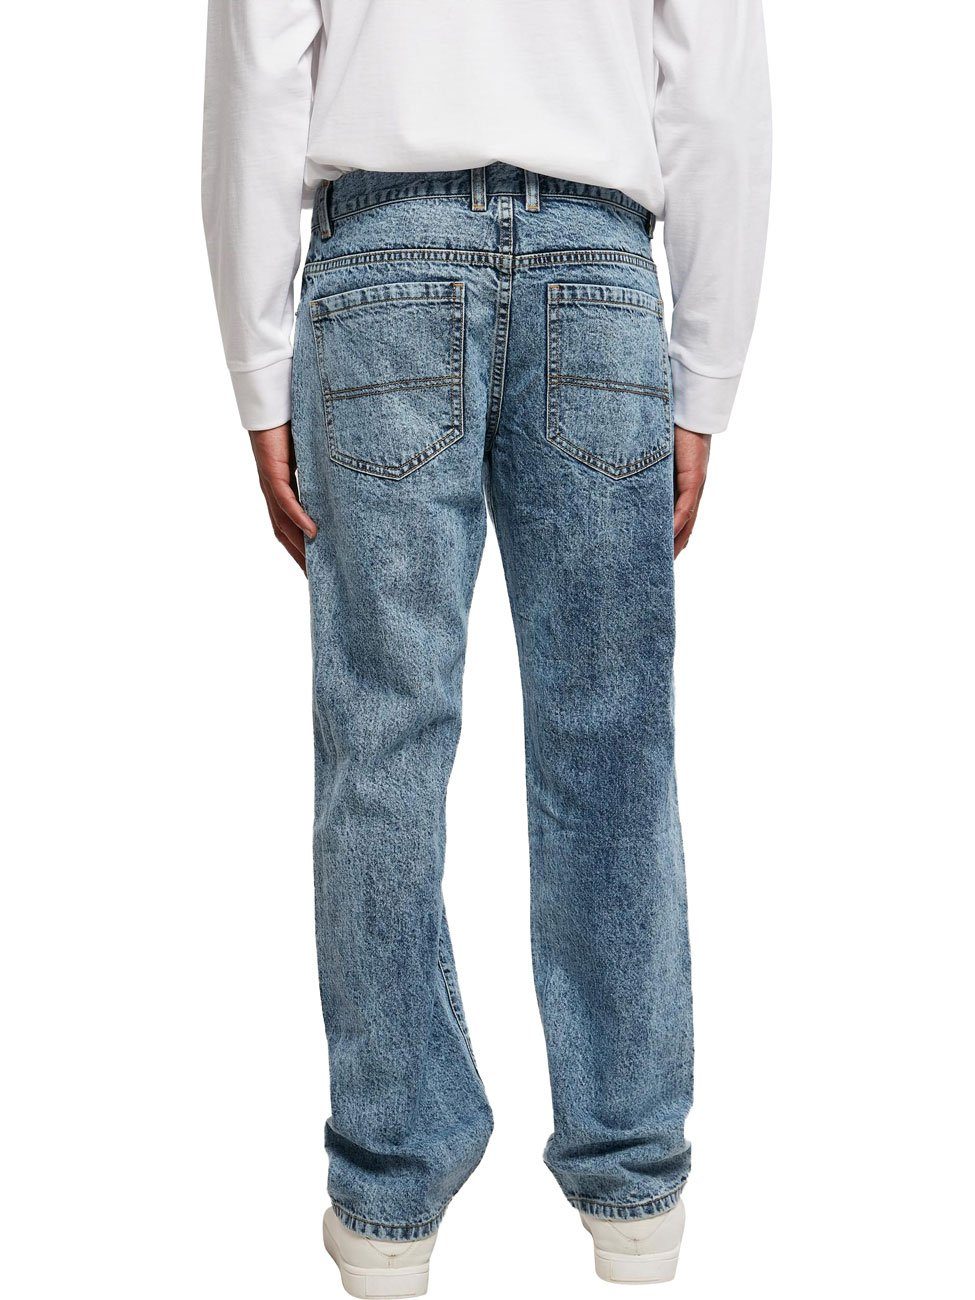 STRAIGHT Skyblue LEG ORGANIC URBAN Straight-Jeans Baumwolle CLASSICS Washed DENIM Light Acid 02432 aus